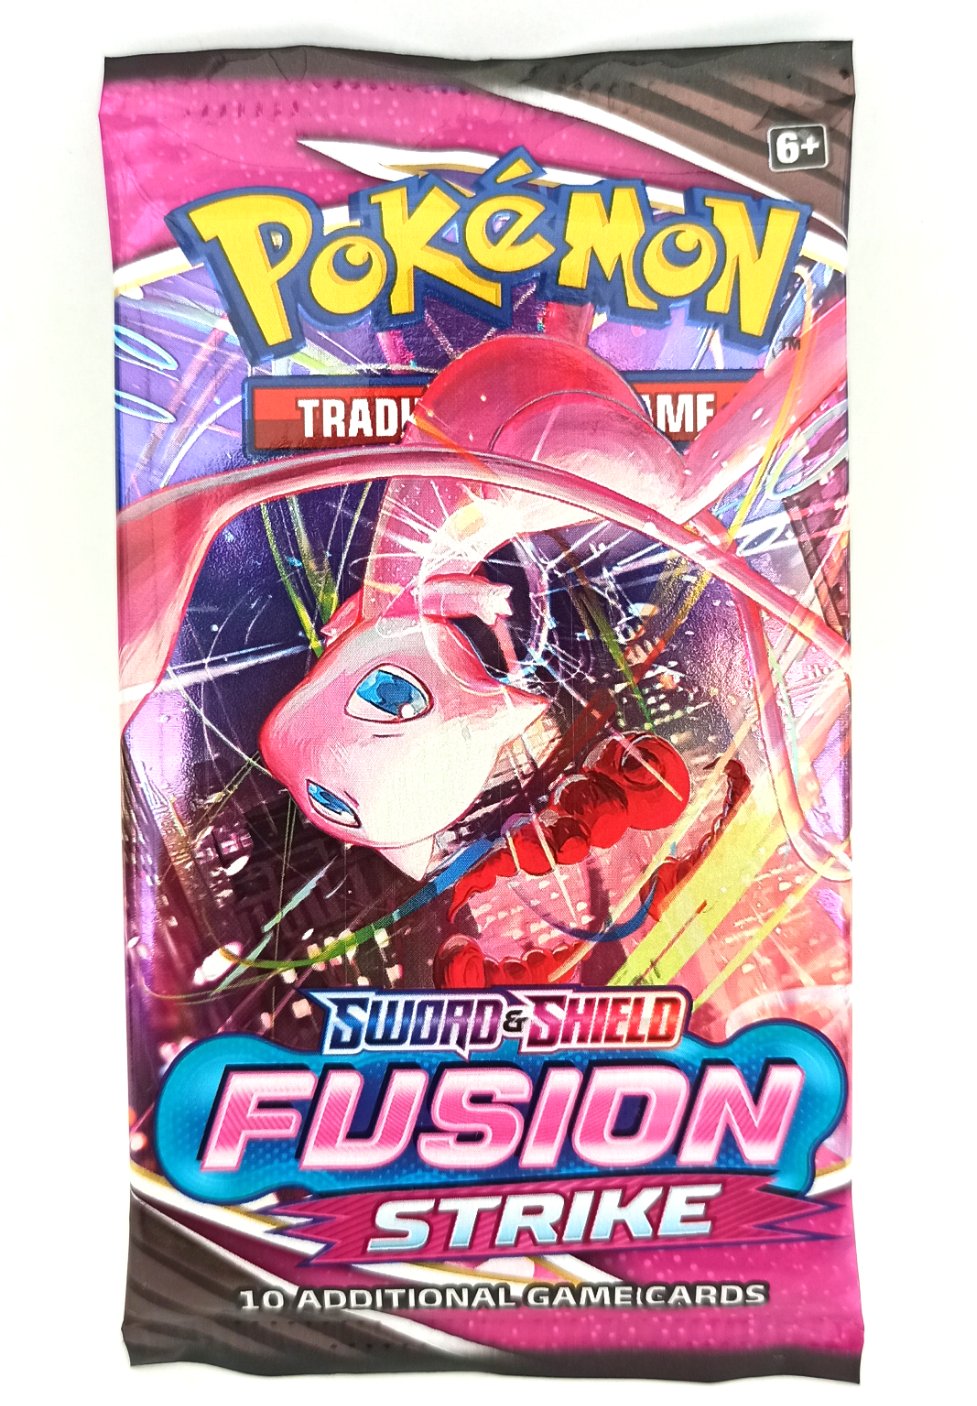 Pokémon Booster Pack - Fusion Strike !-. Mew ARTWORK .-!